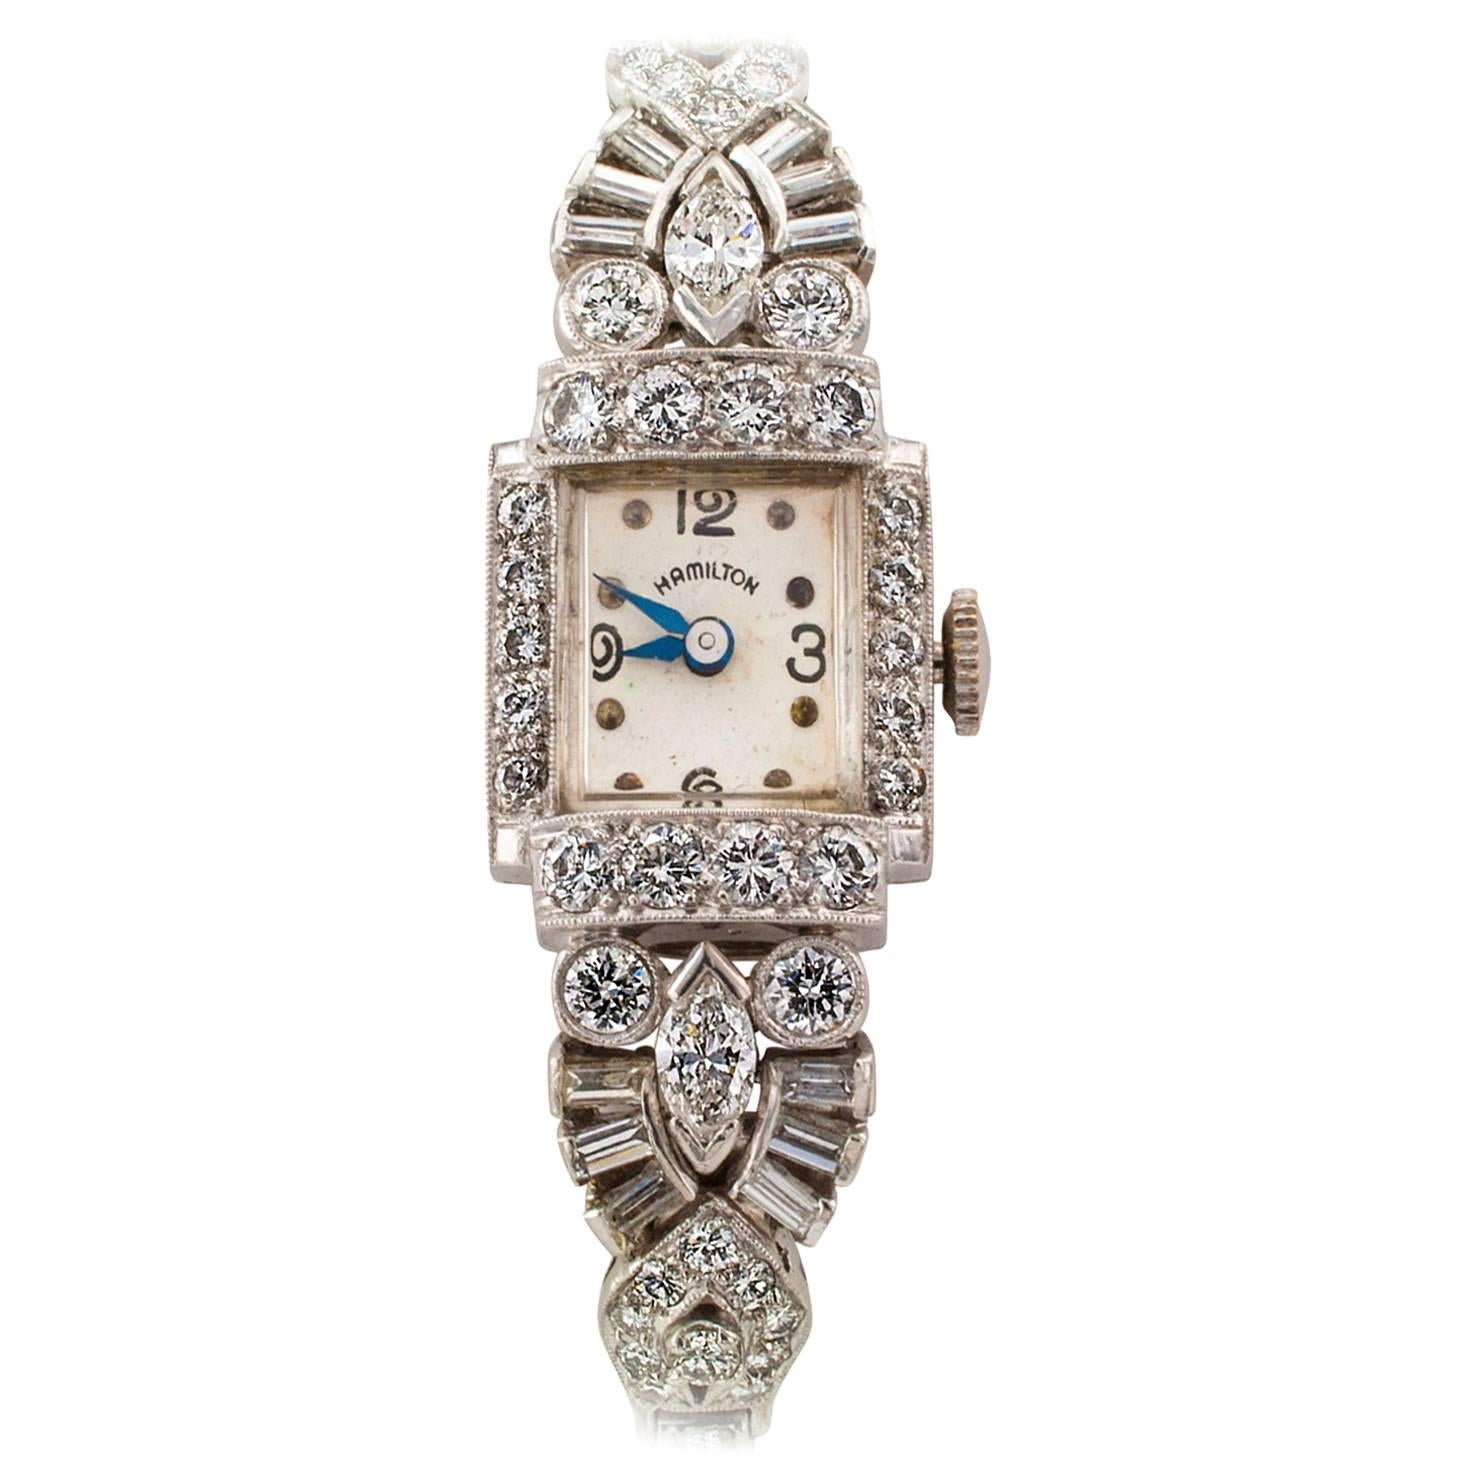 Hamilton Lady's Platinum Diamond Wristwatch